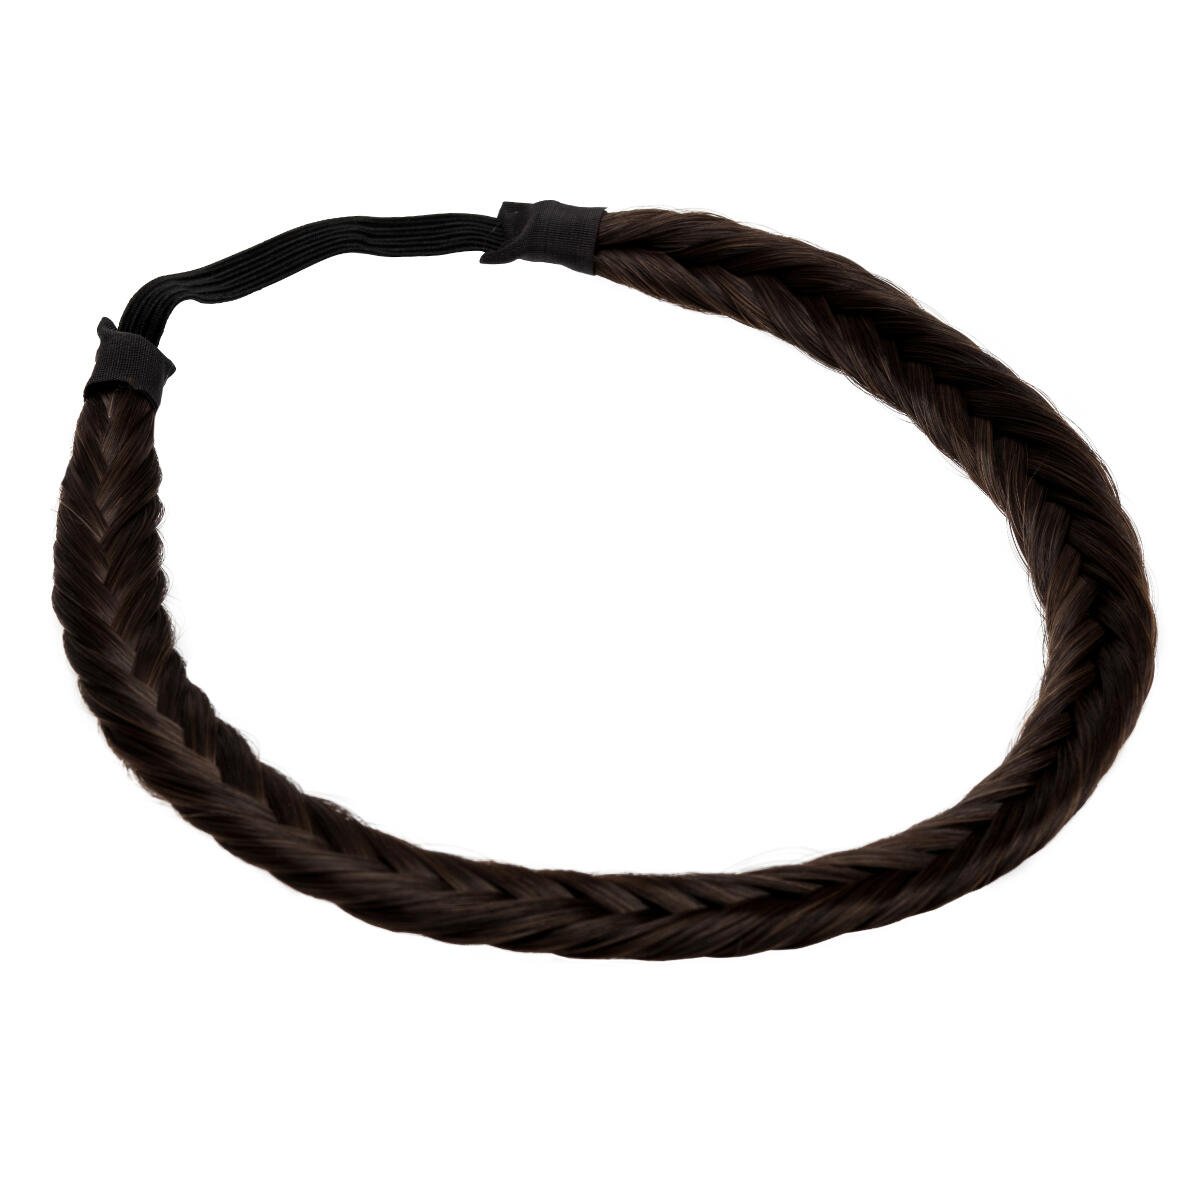 Synthetic Braided Headband 2.3 Chocolate Brown 0 cm